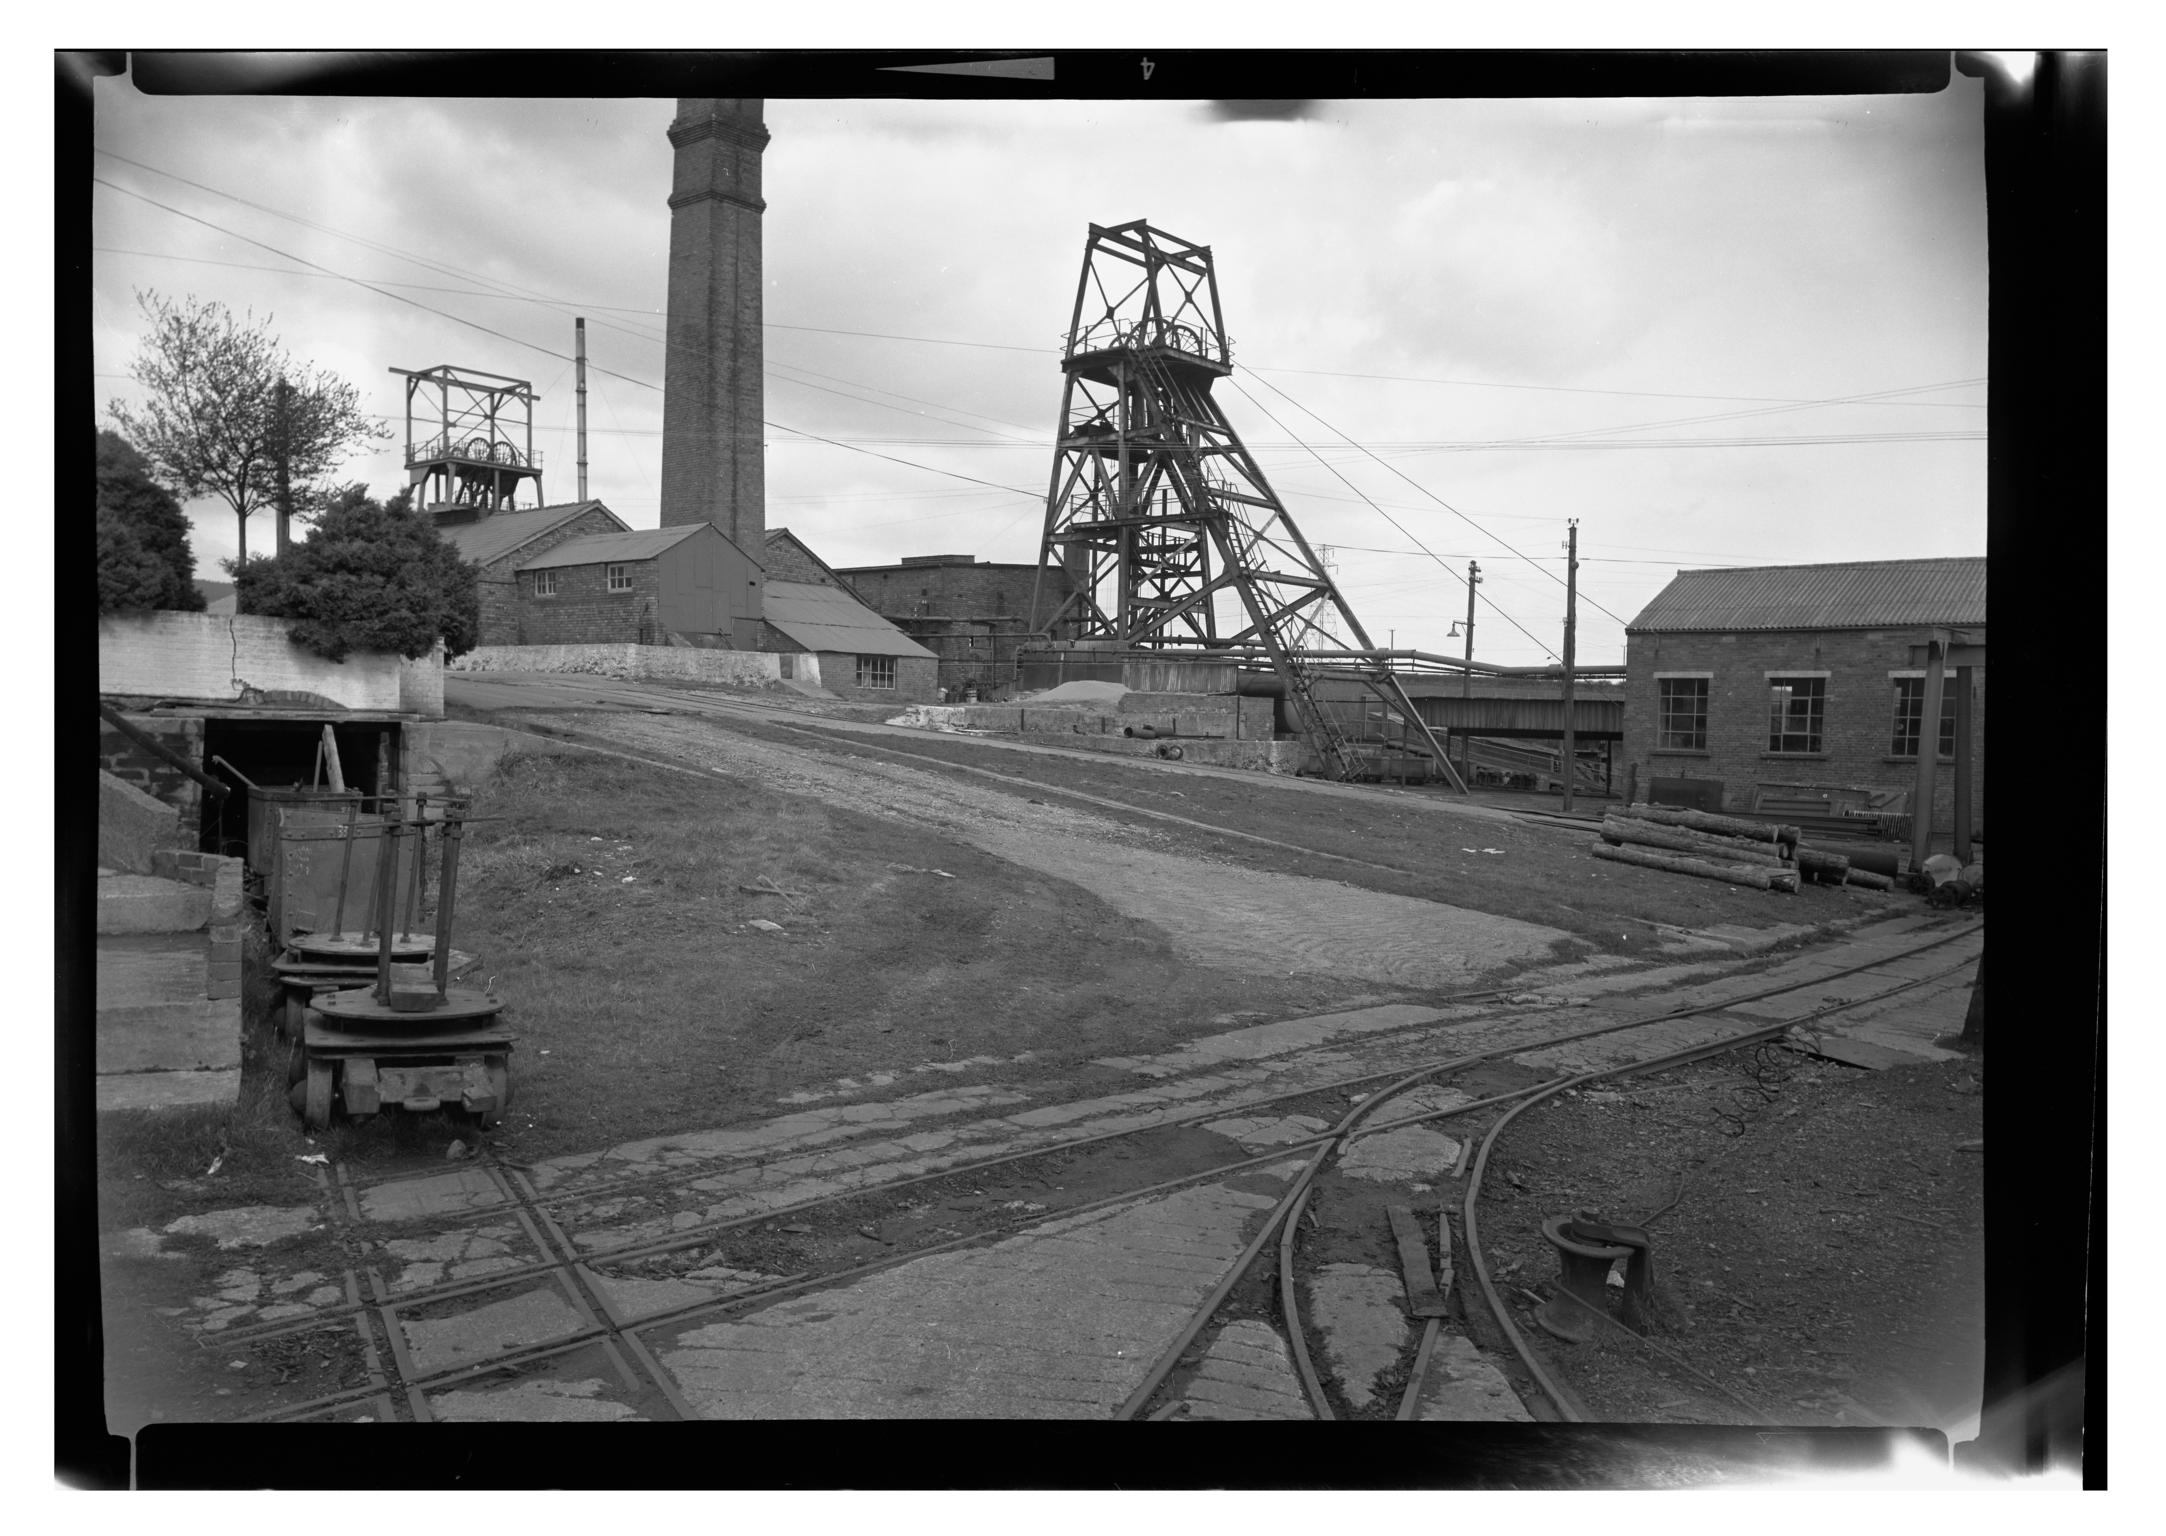 Llanharry iron ore mine, negative